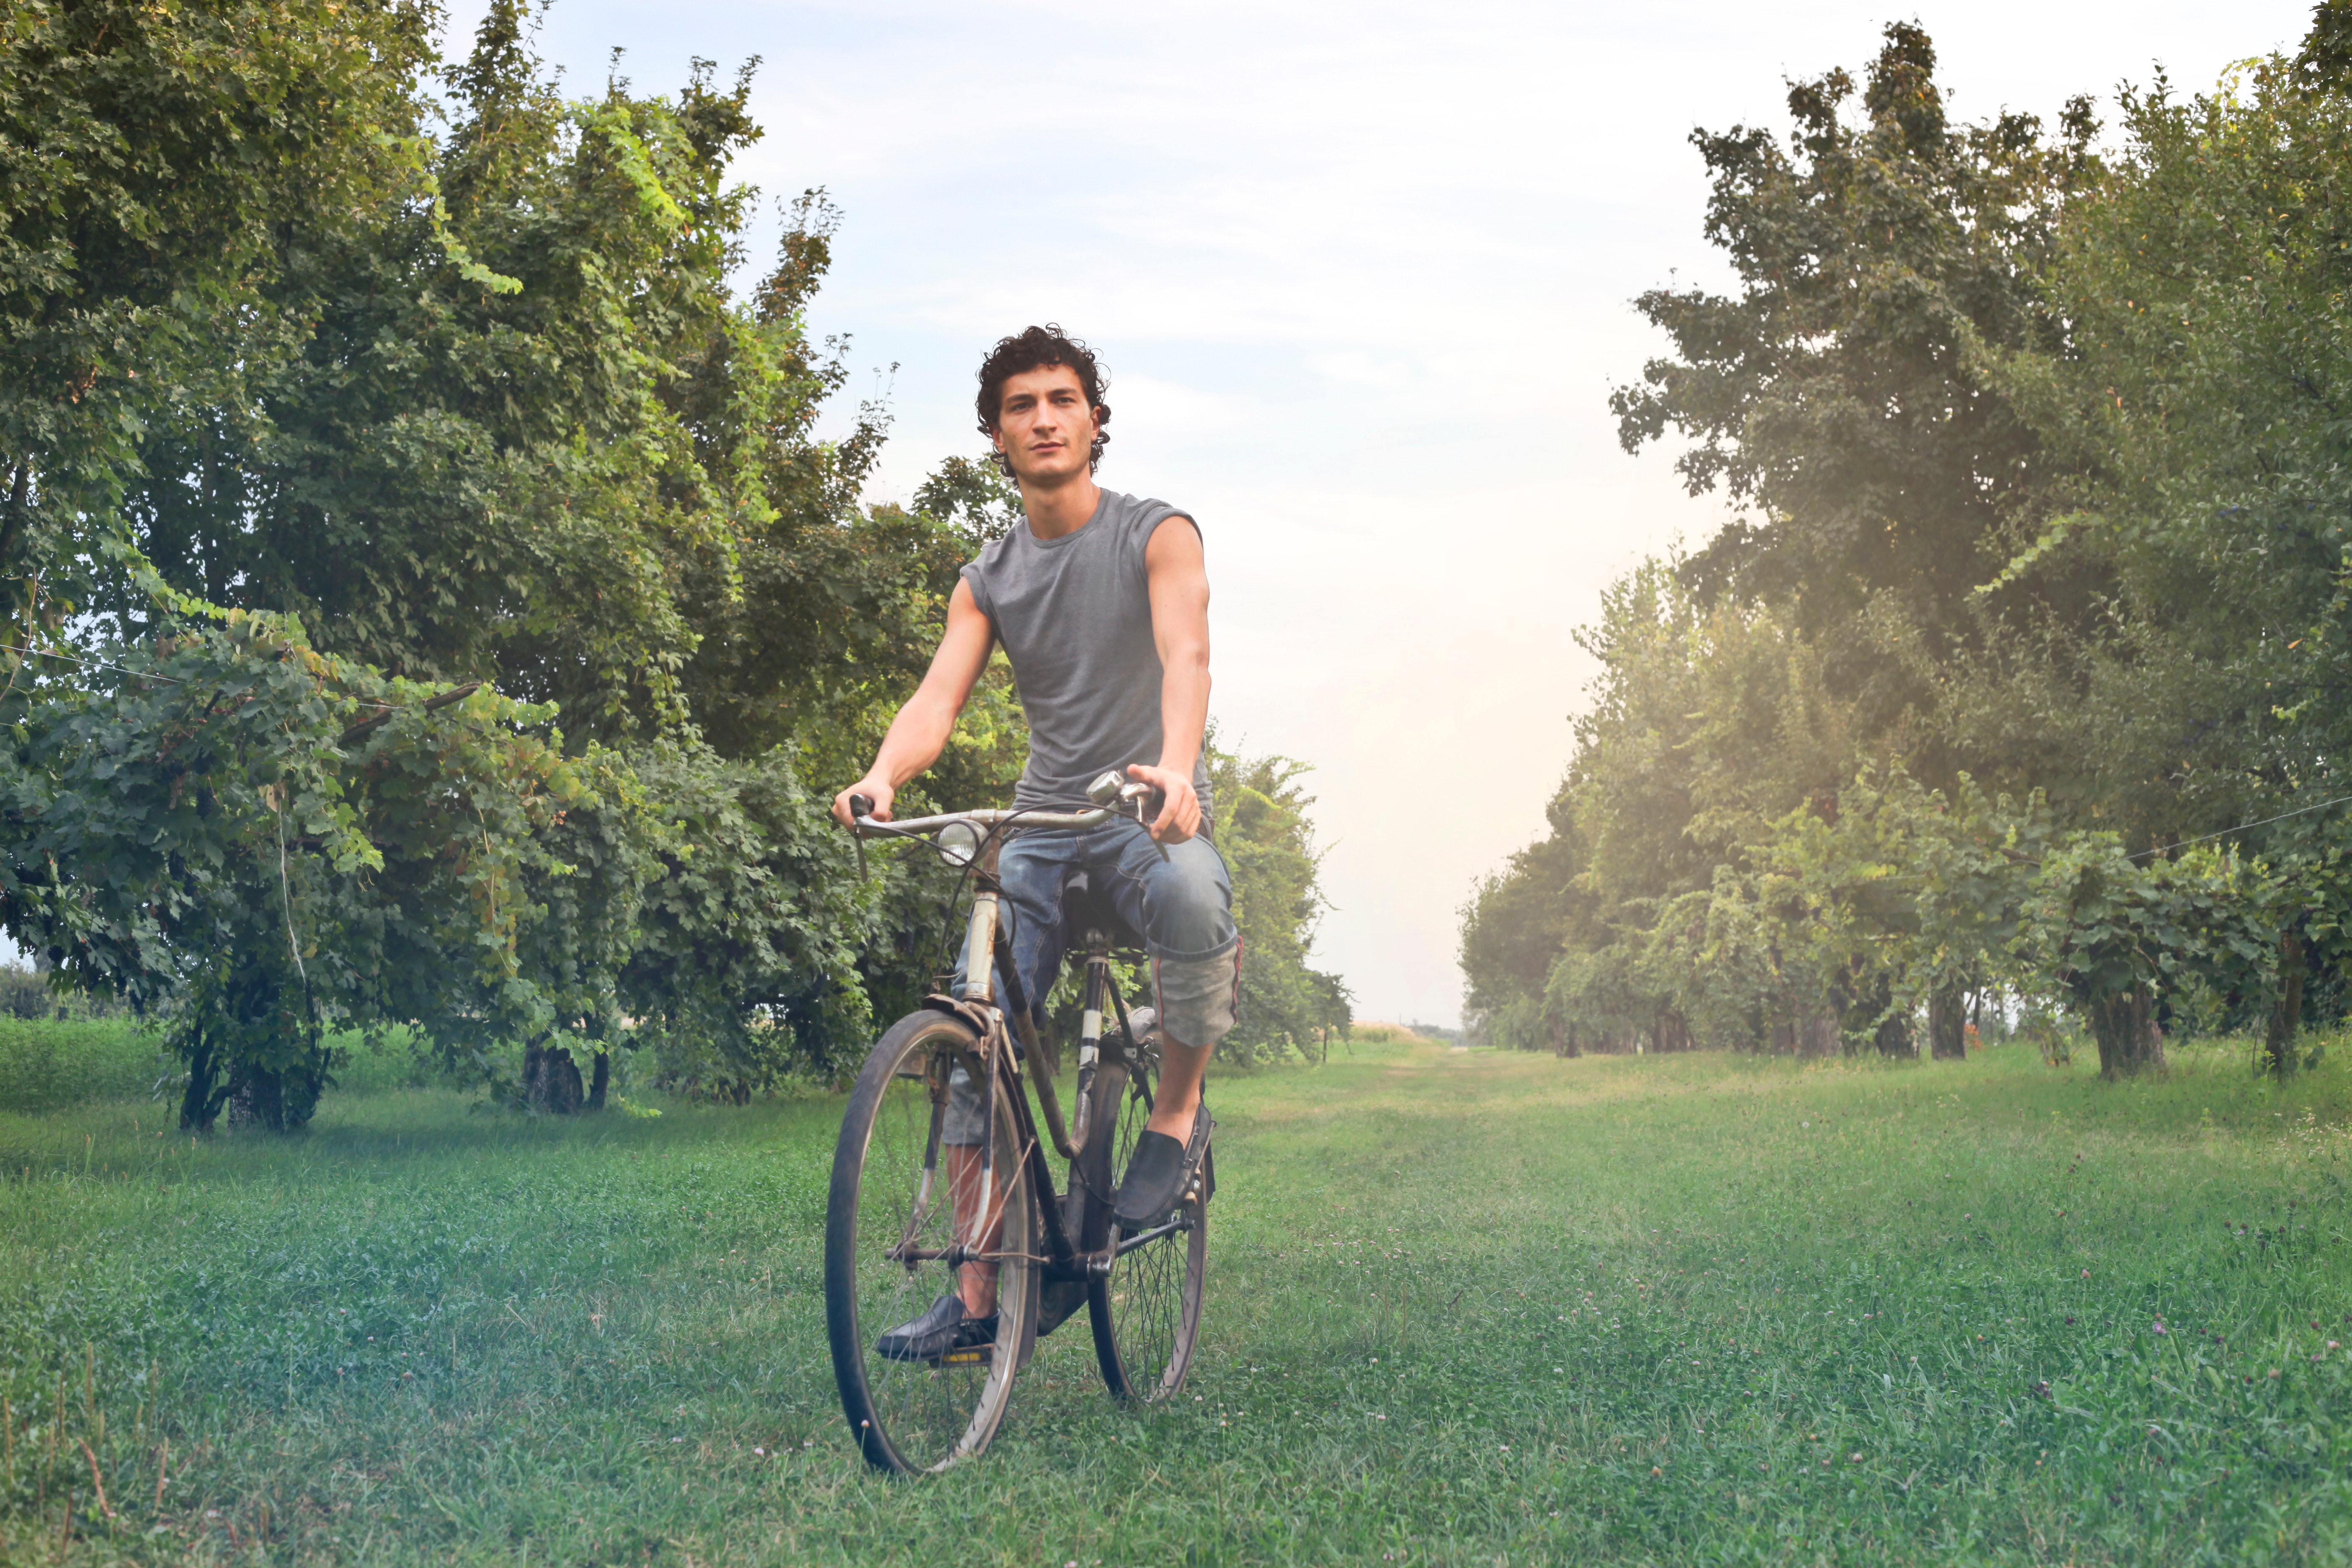 Man in gray sleeveless shirt riding bike photo